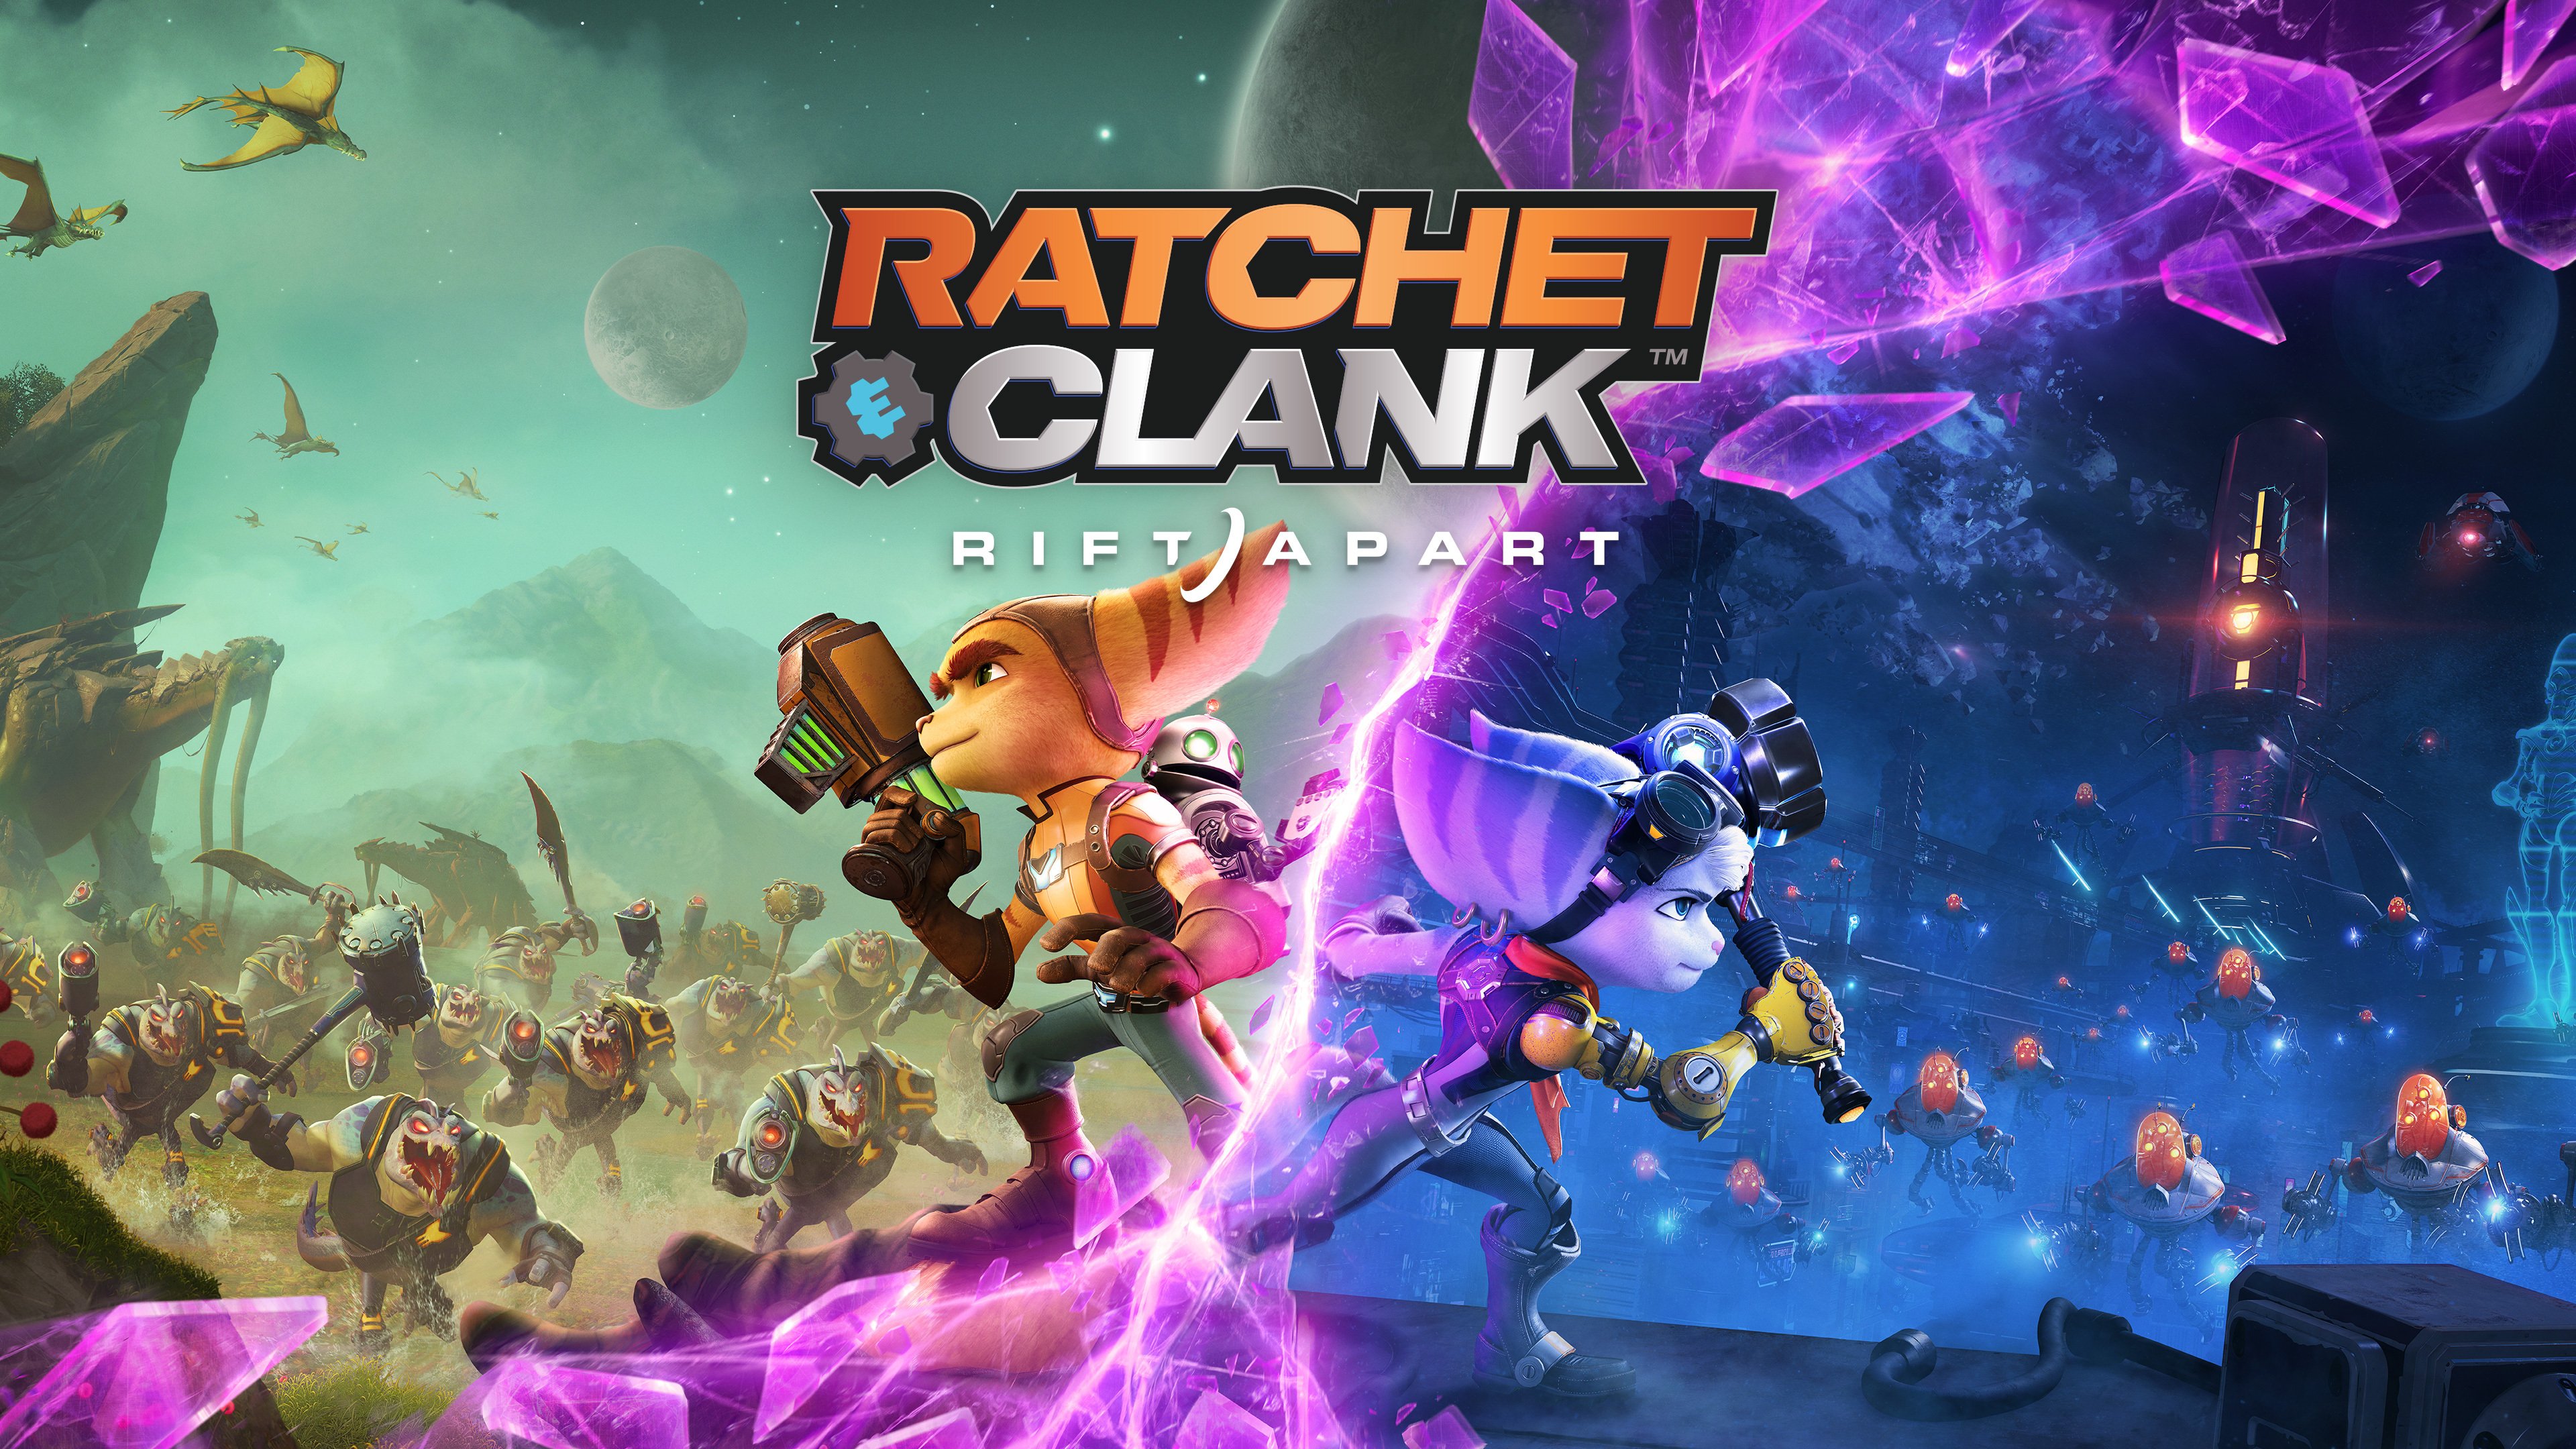 Ratchet & Clank (Ratchet & Clank 2: Going Commando) 100% (PLEASE